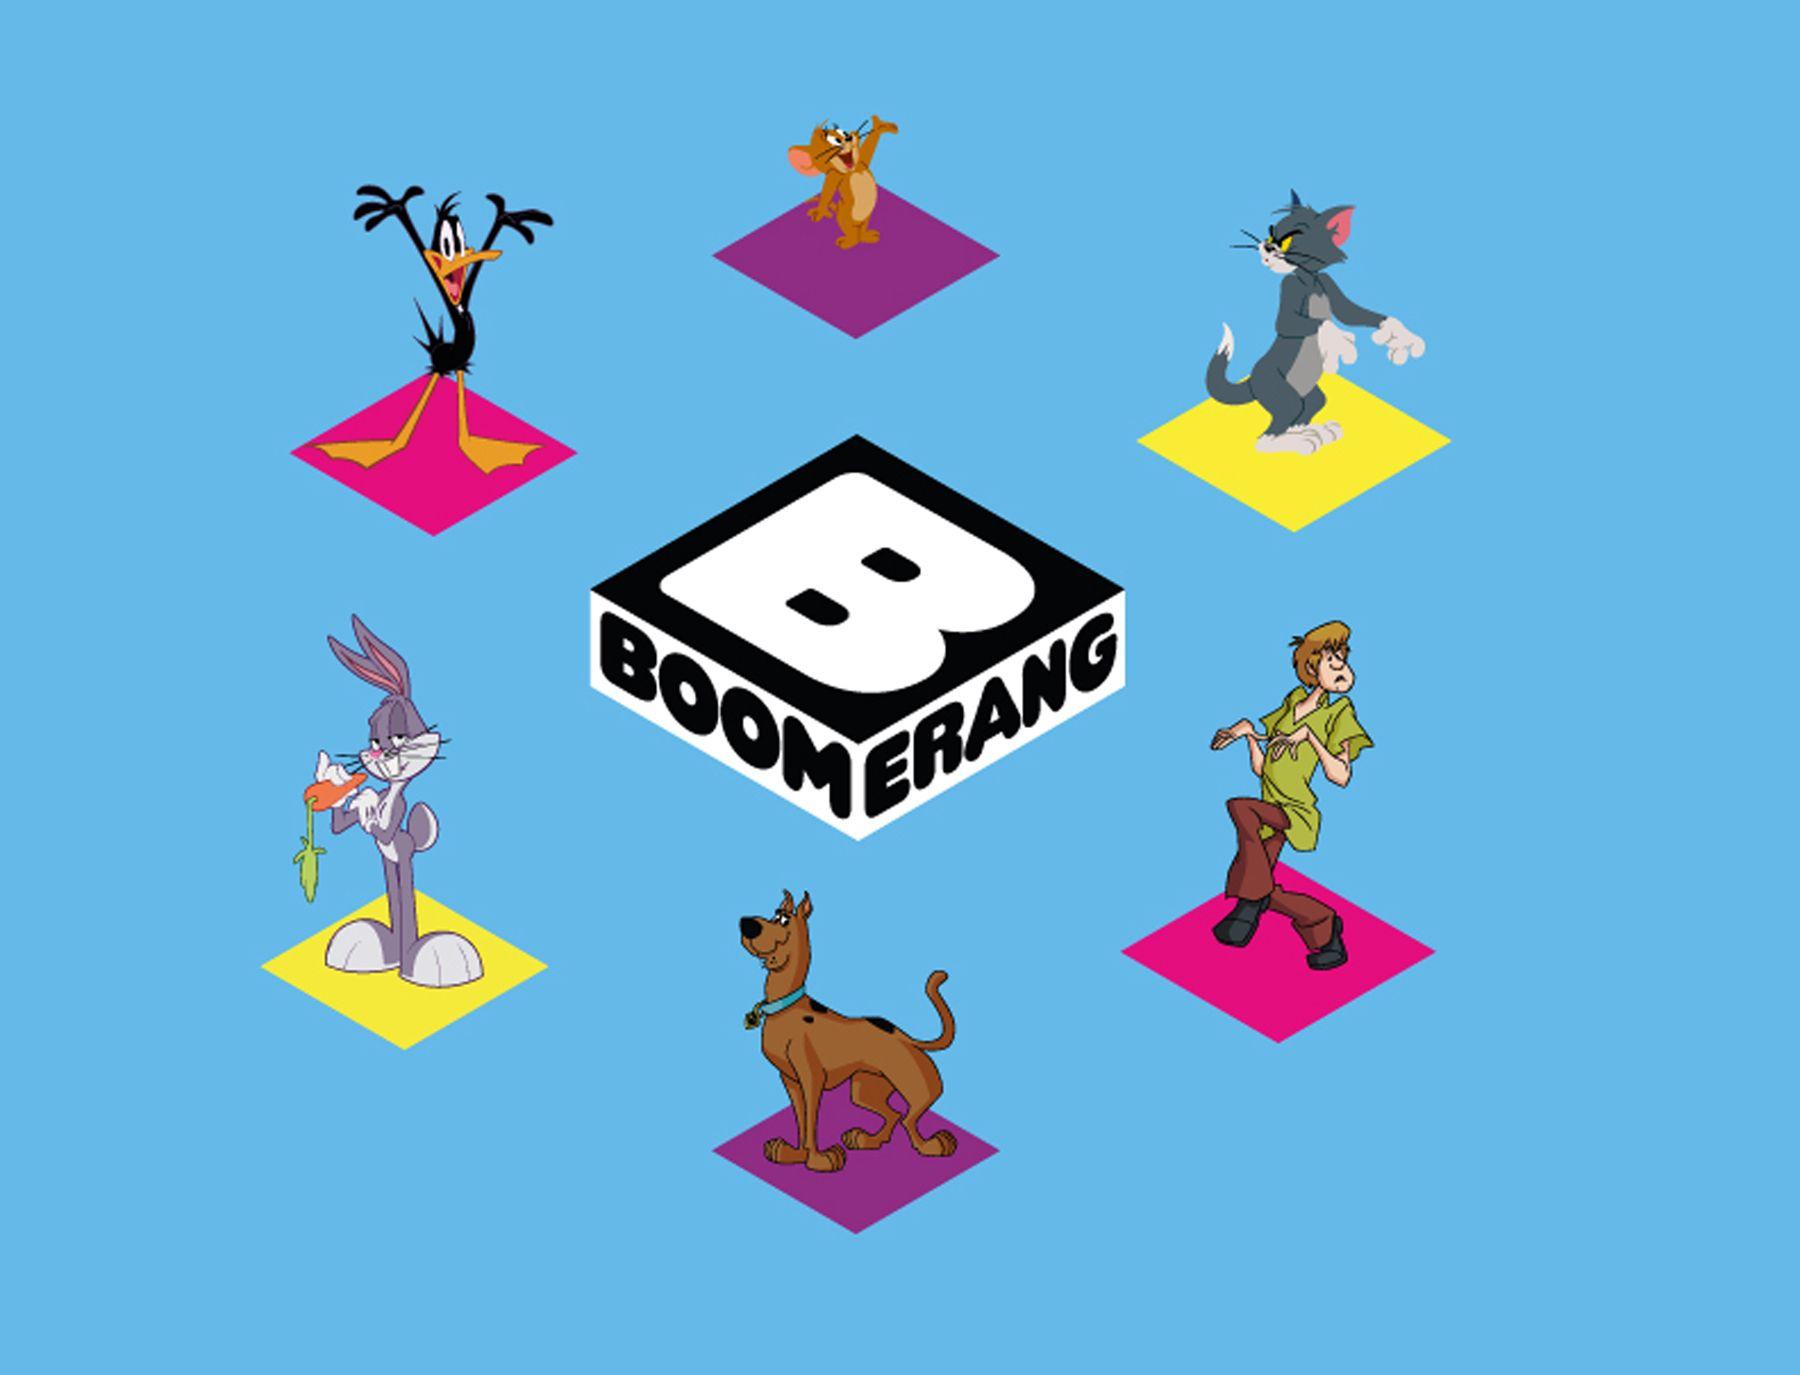 Boomerang Us Logo - Turner Broadcasting Re-Launches Kids Brand, Boomerang - B&T